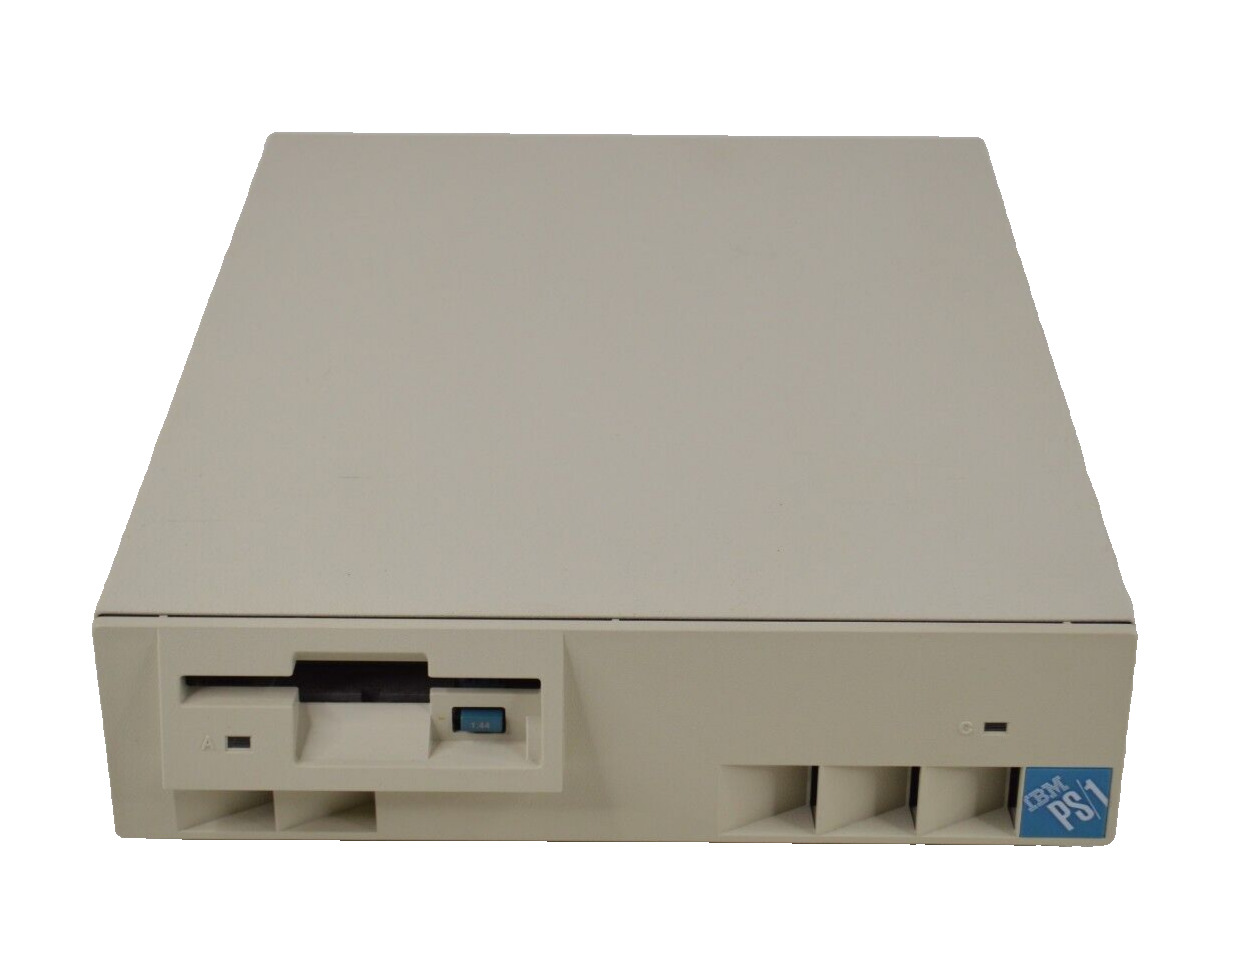 Vintage IBM PS/1 Type 2011 Personal Computer PC 1980s Desktop UNTESTED